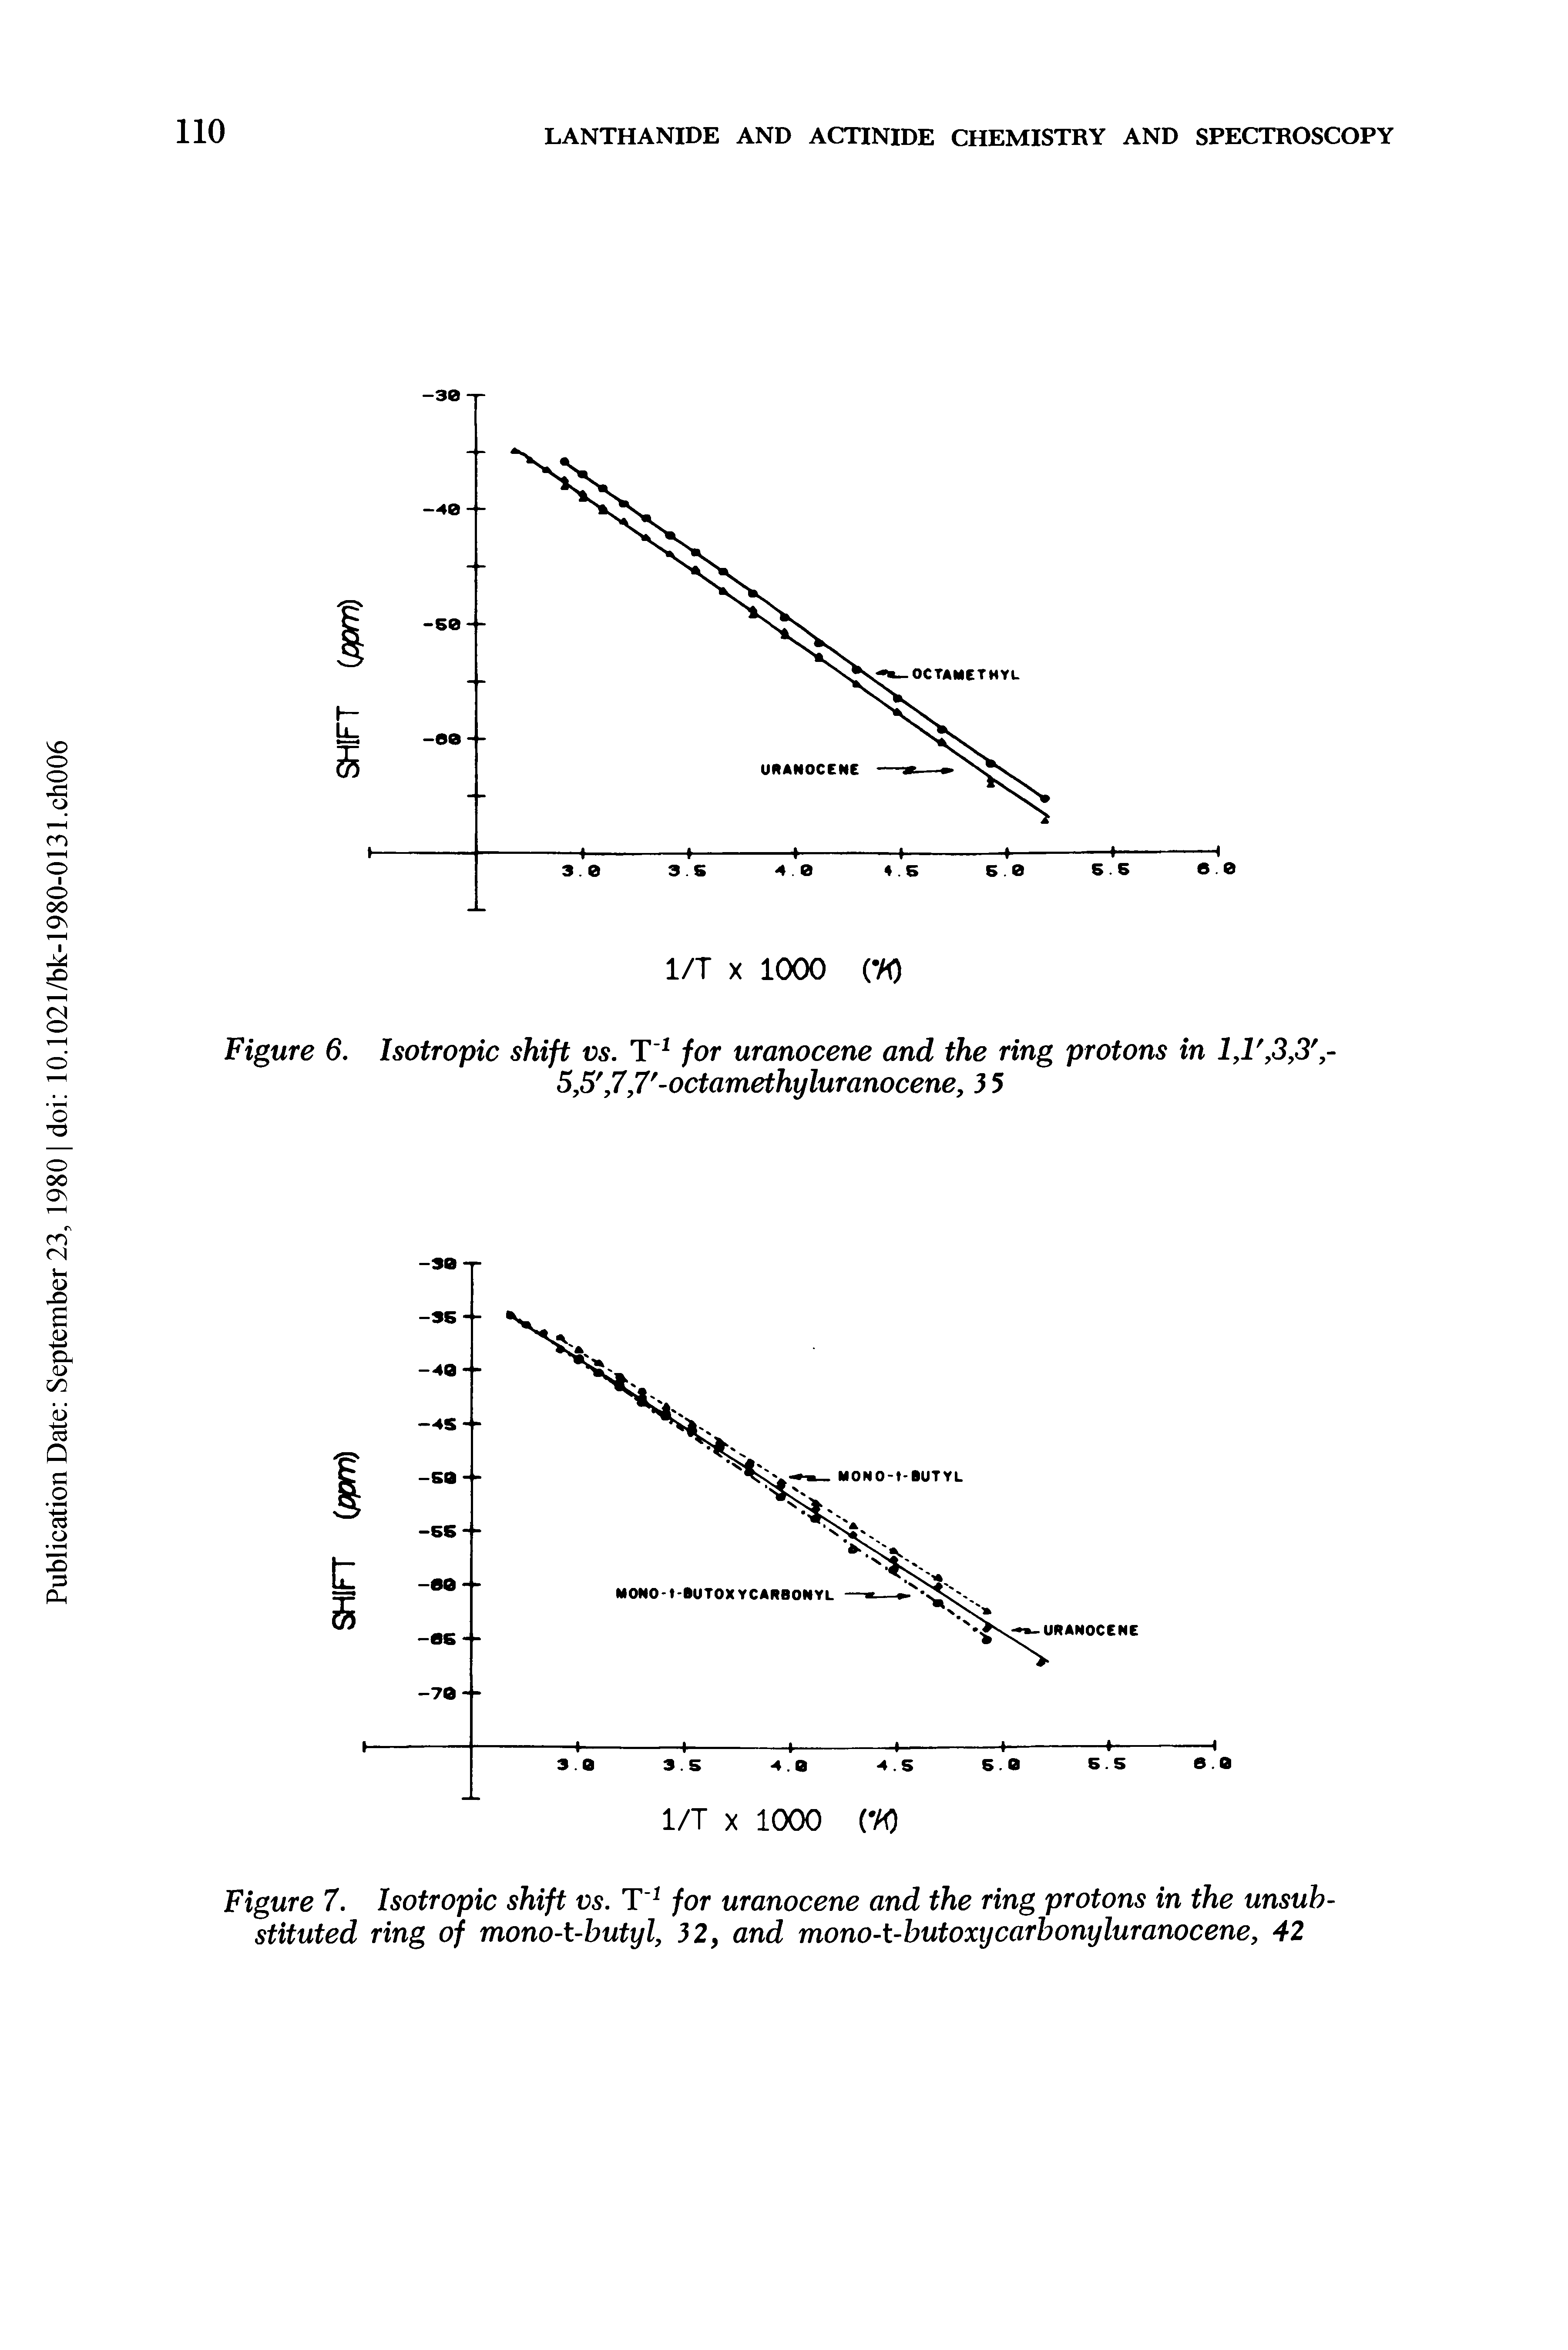 Figure 6. Isotropic shift vs. T 1 for uranocene and the ring protons in 5,5, 7,7 -octamethyluranocene, 3 5...